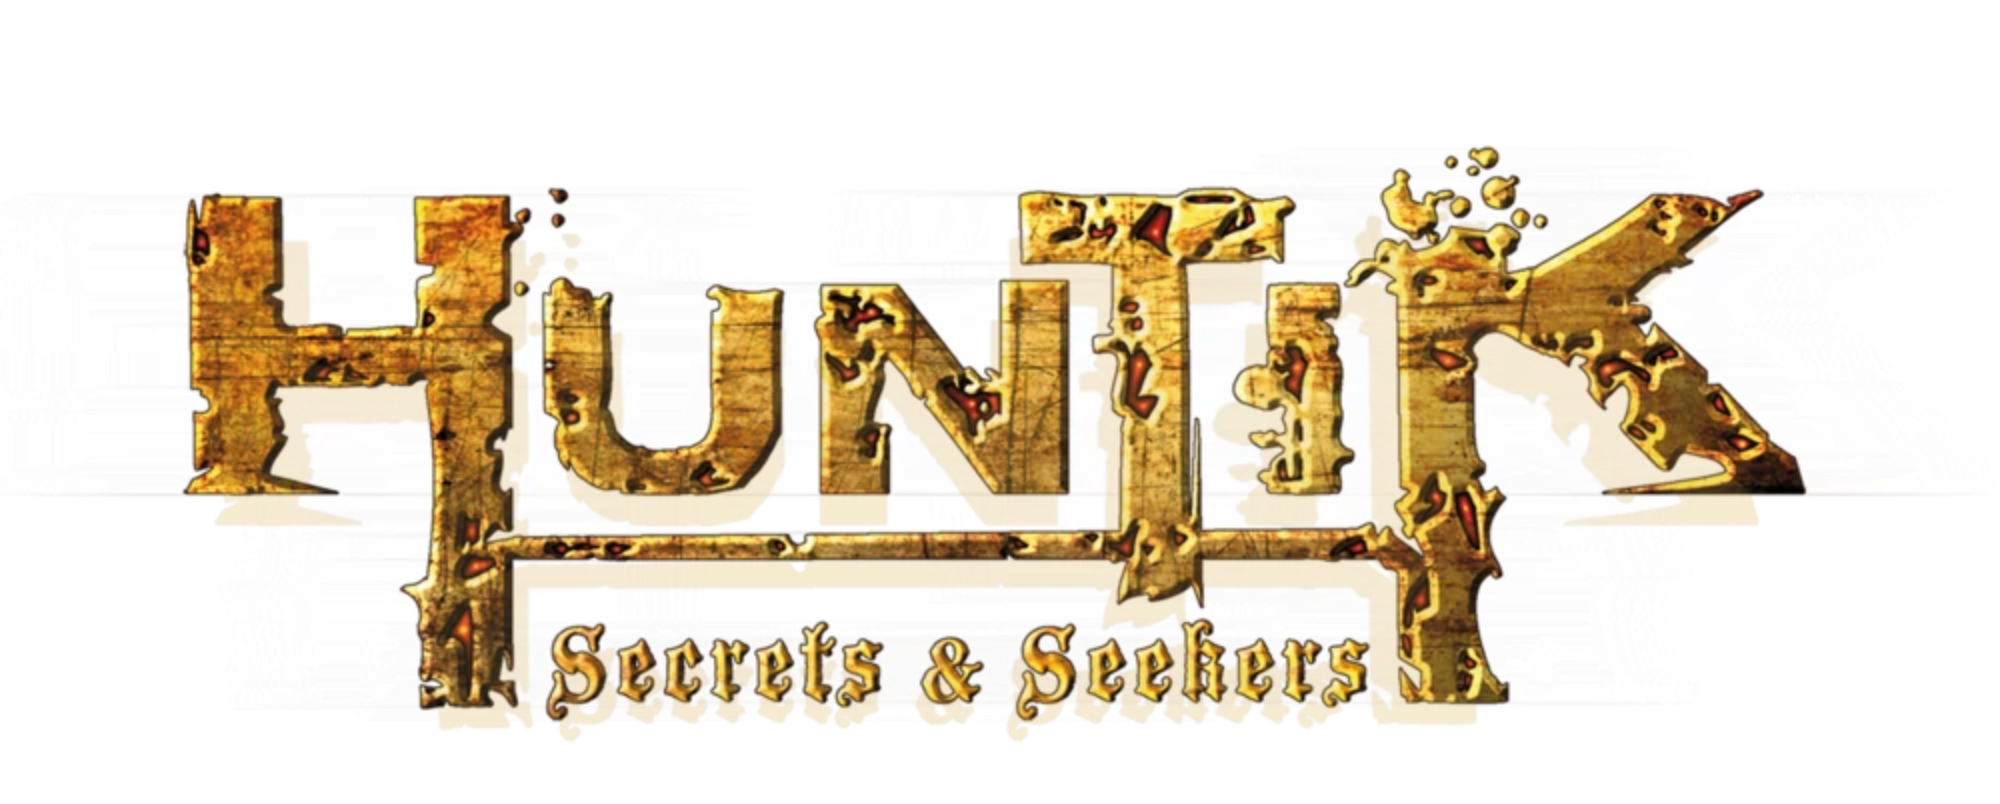 Huntik: Secrets & Seekers Complete (6 DVDs Box Set)